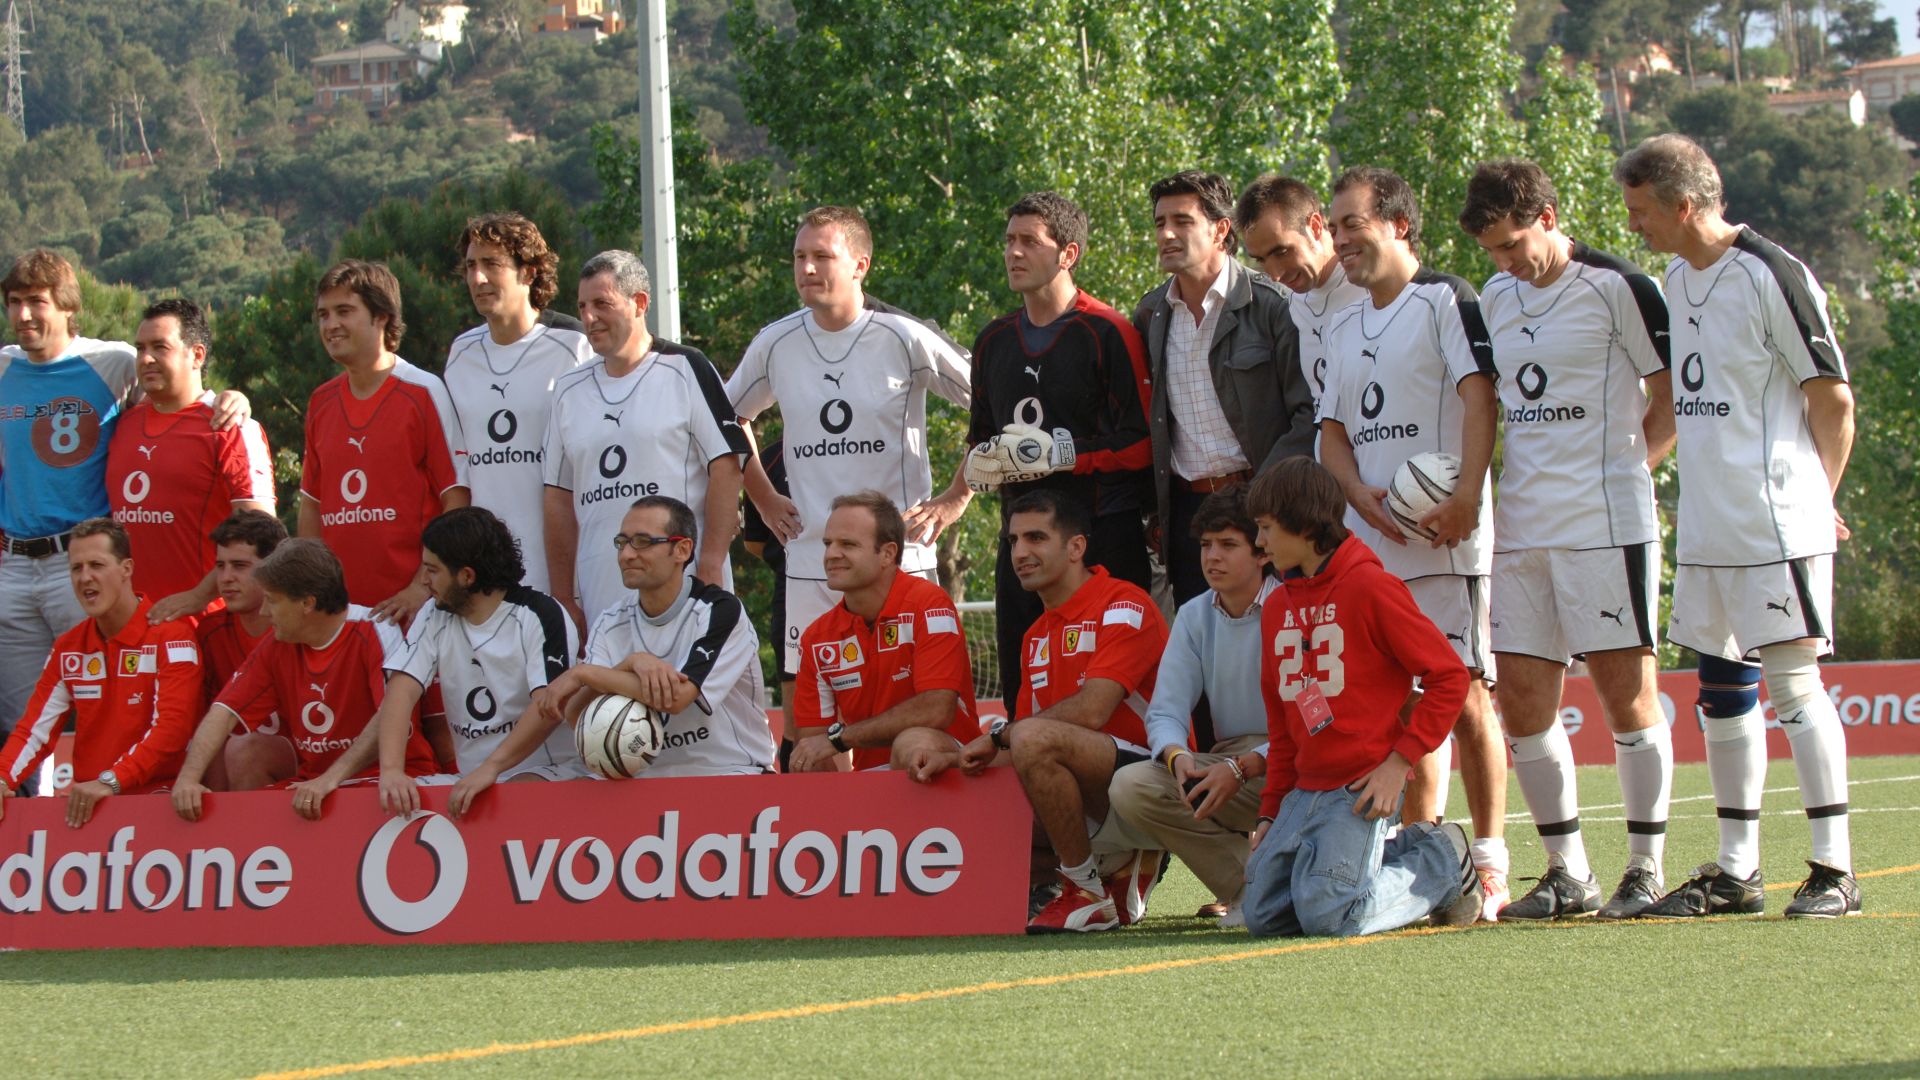 Copa Vodafone Ferrari 2005